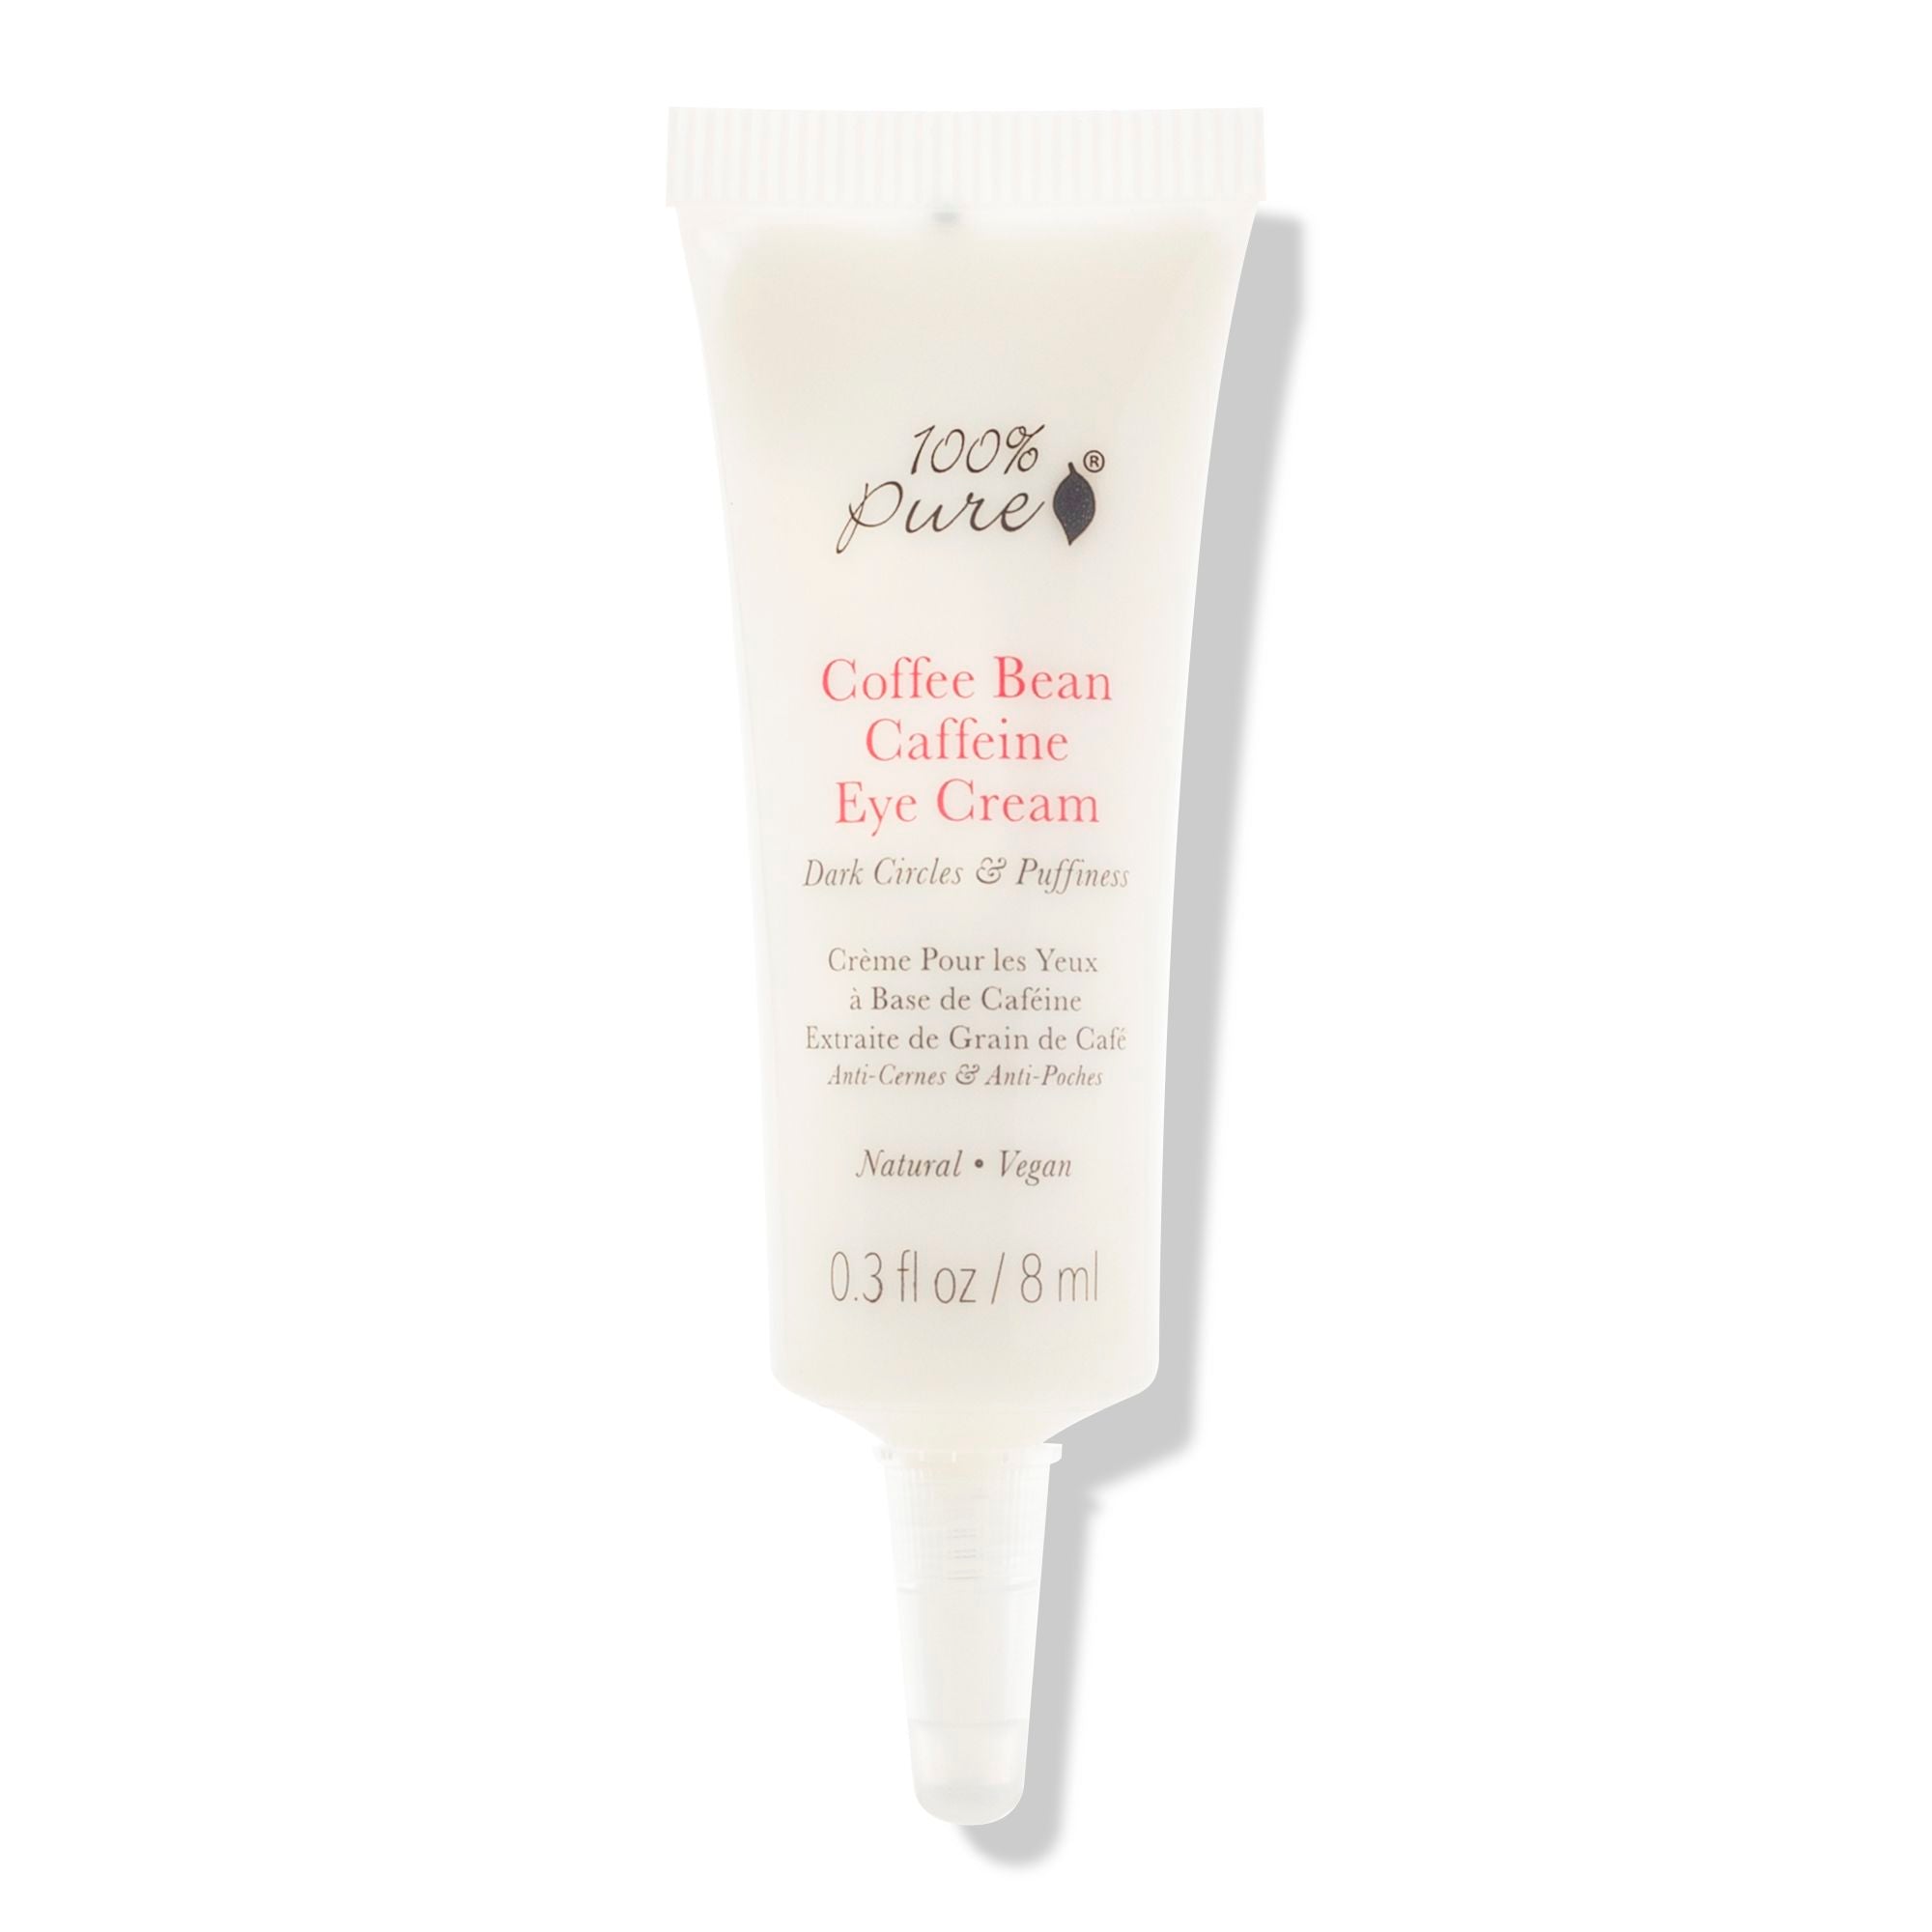 Coffee Bean Caffeine Eye Cream: 0.3 oz